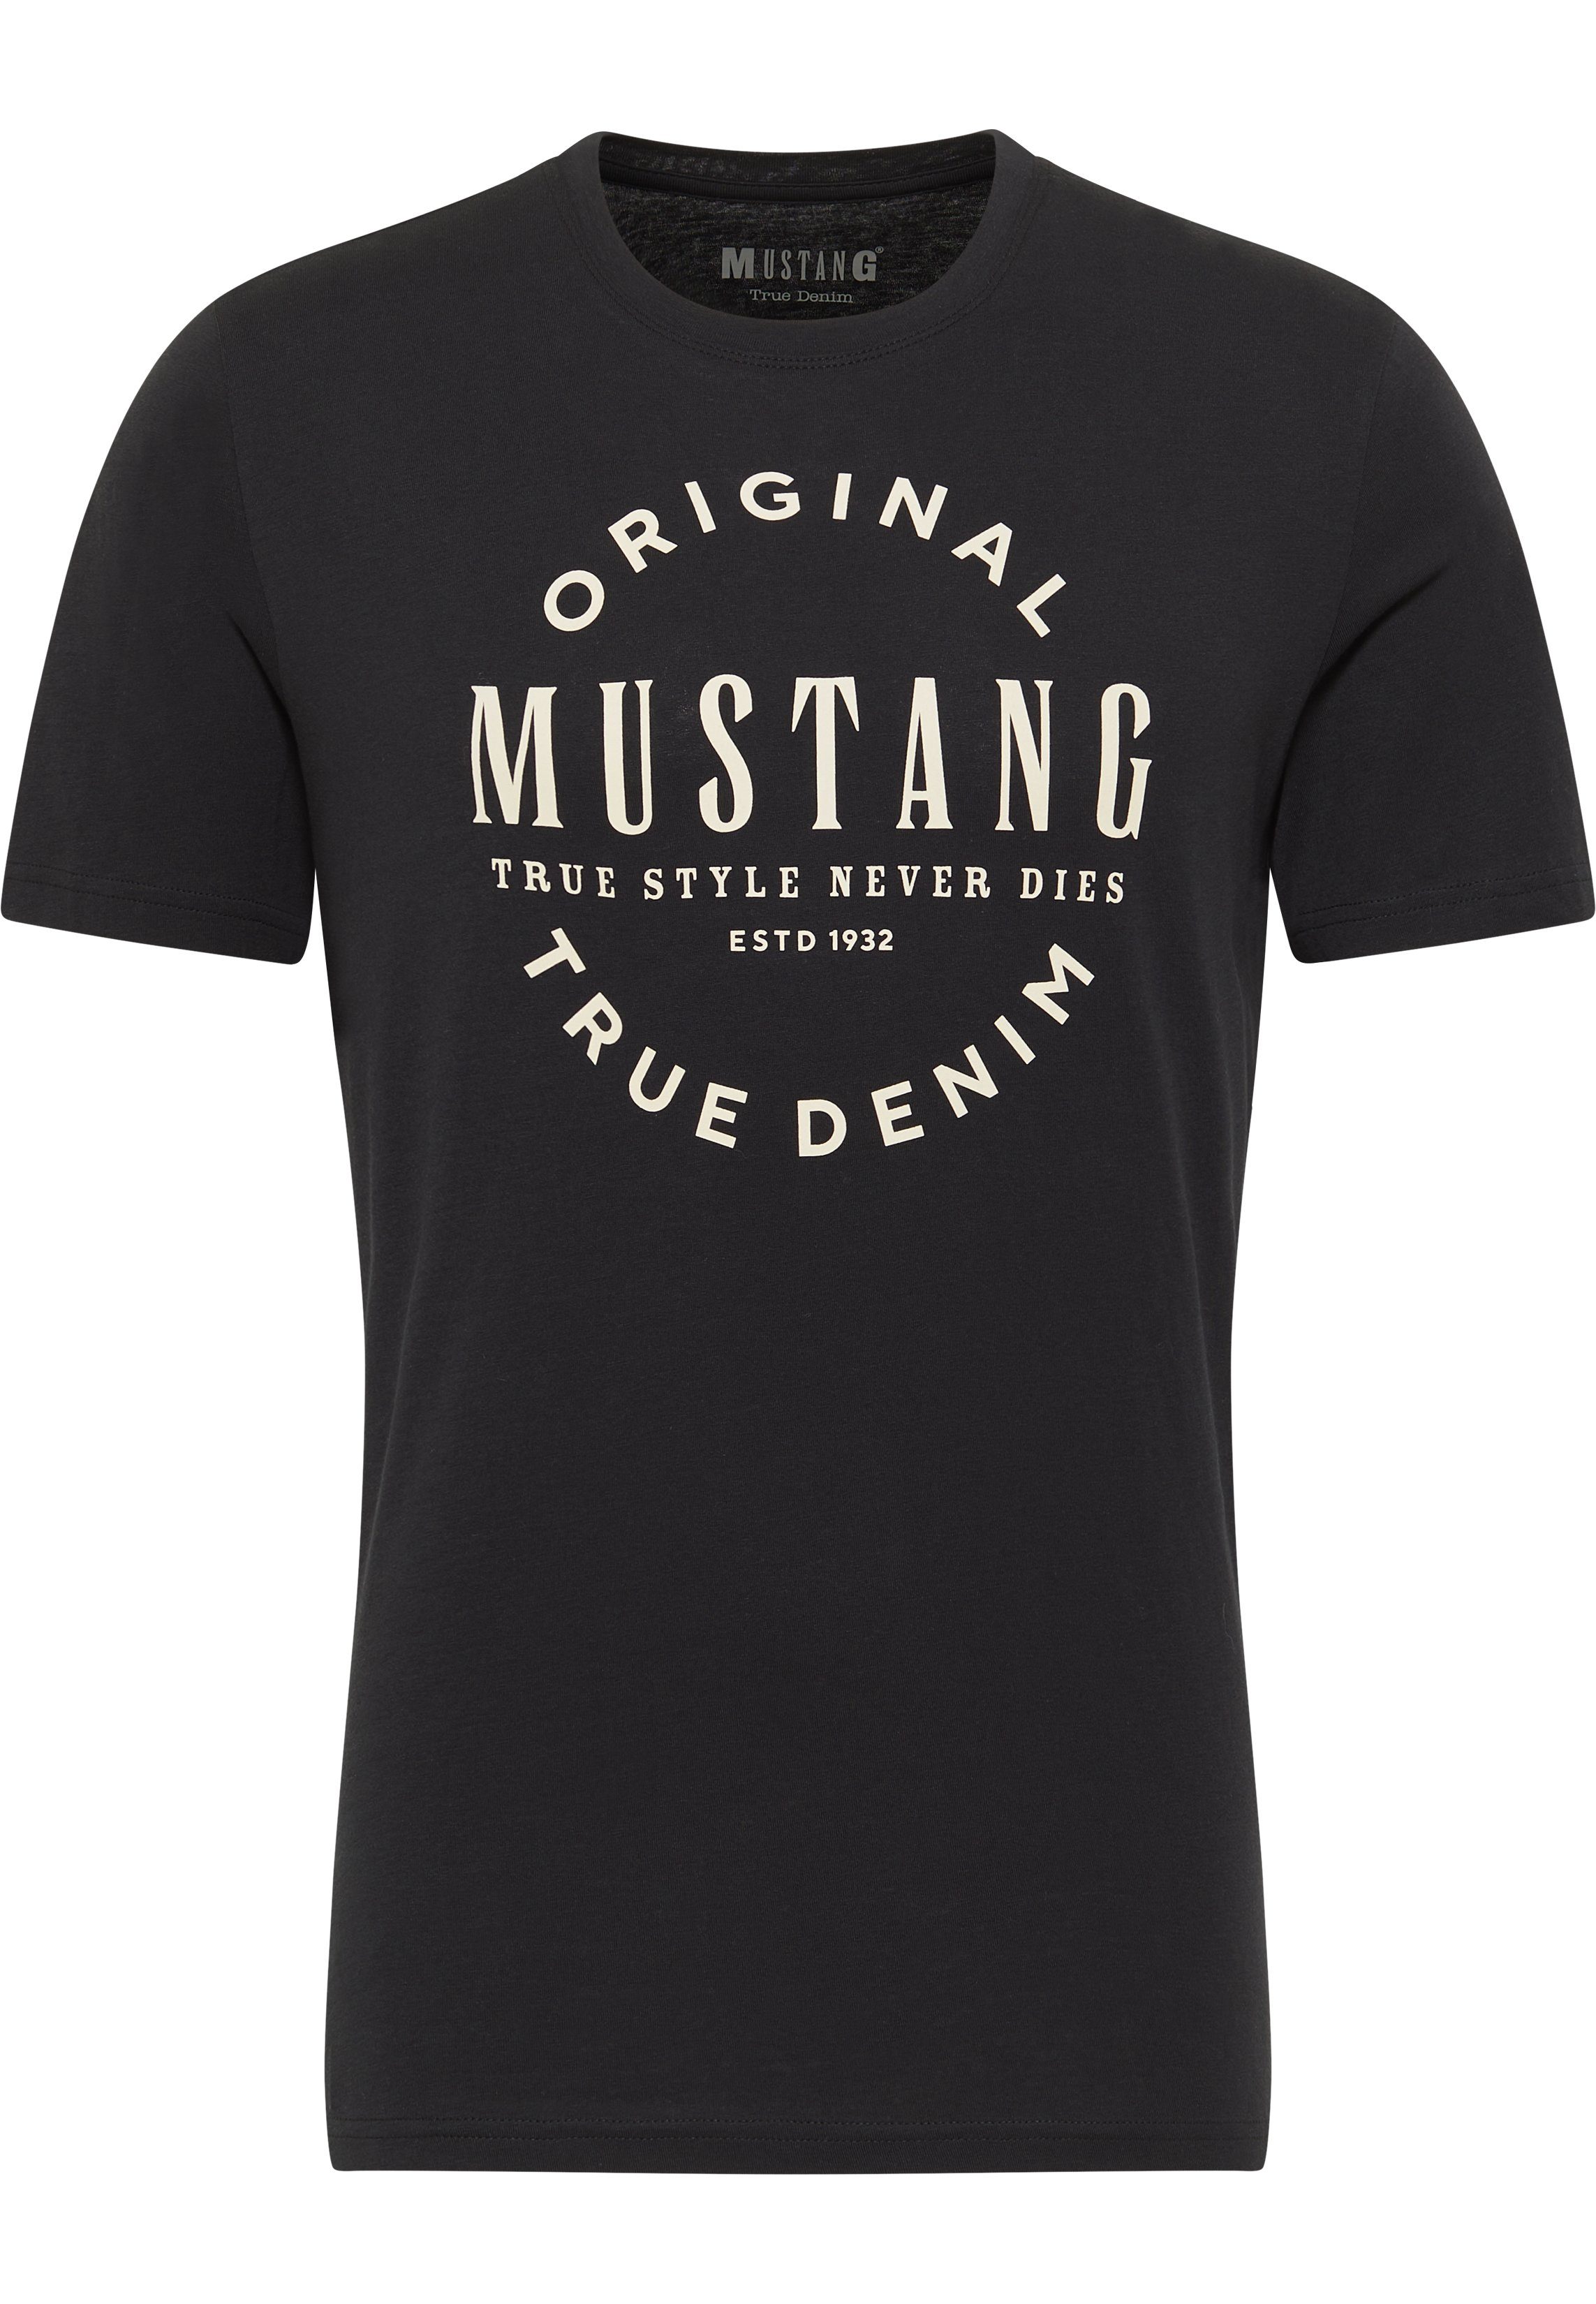 Alex MUSTANG Print Style C T-Shirt schwarz